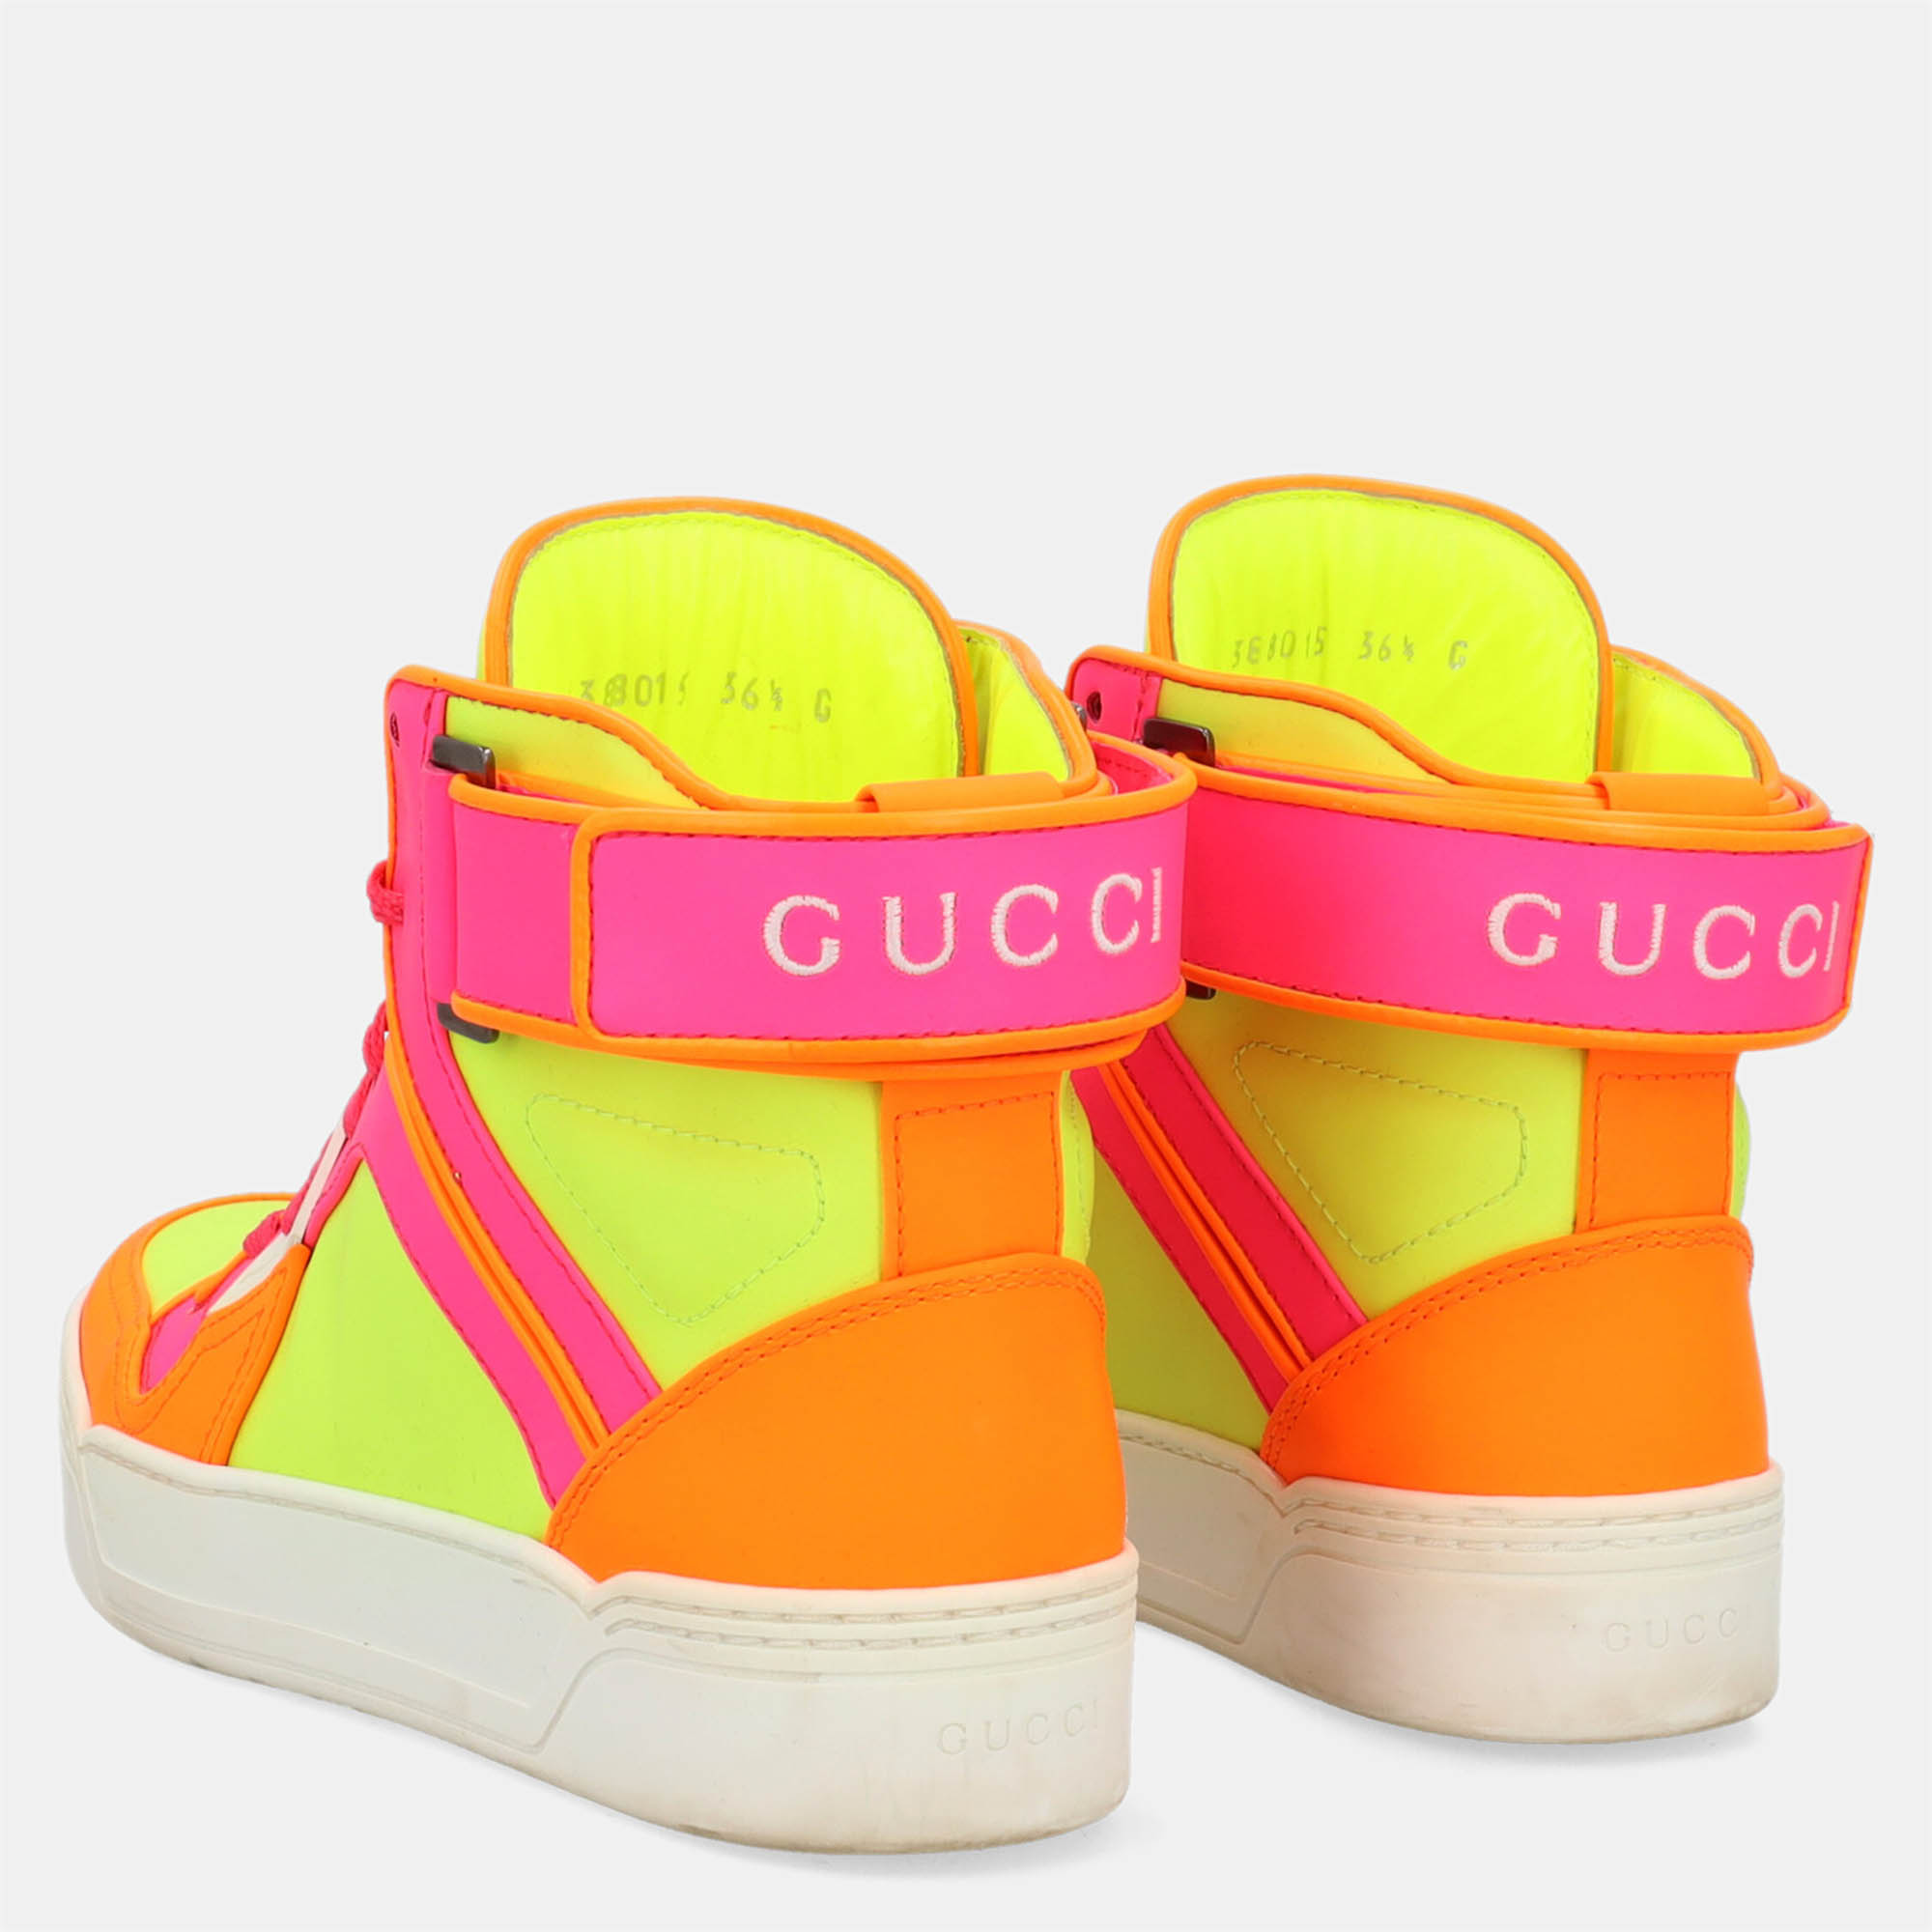 Gucci  Women's Leather Sneakers - Neon - EU 36.5